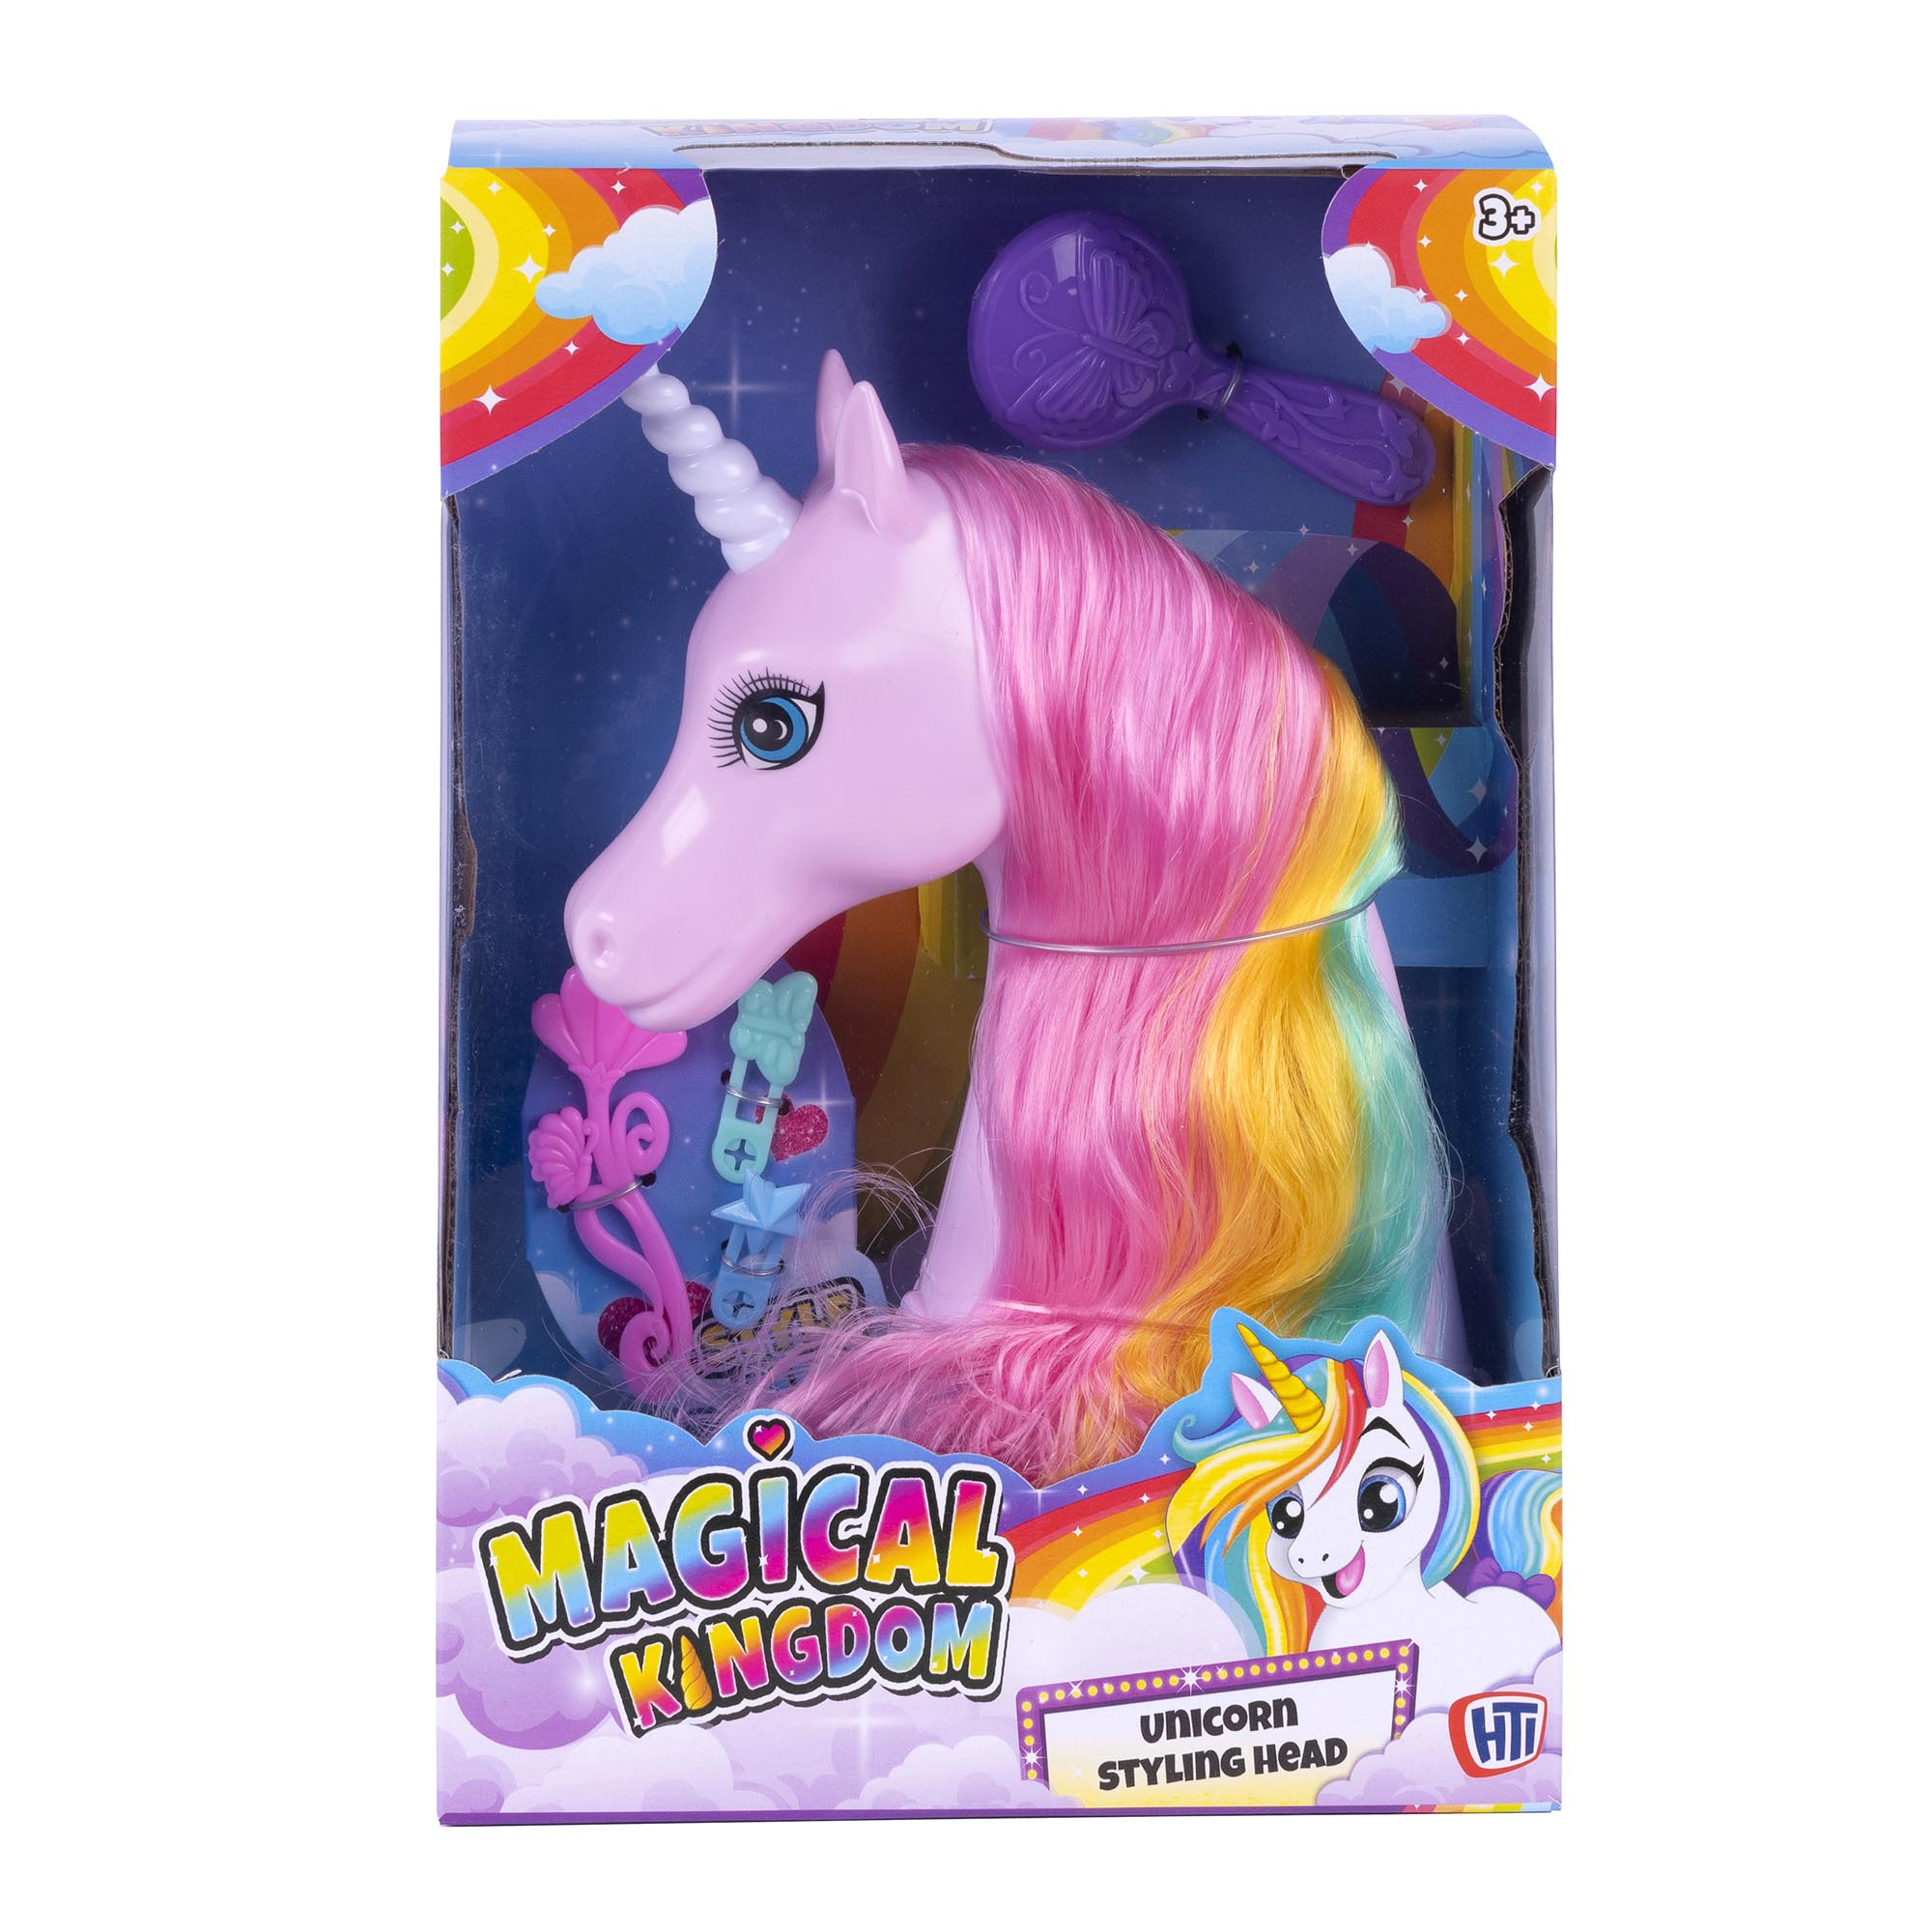 Magical Kingdom Unicorn Styling Head